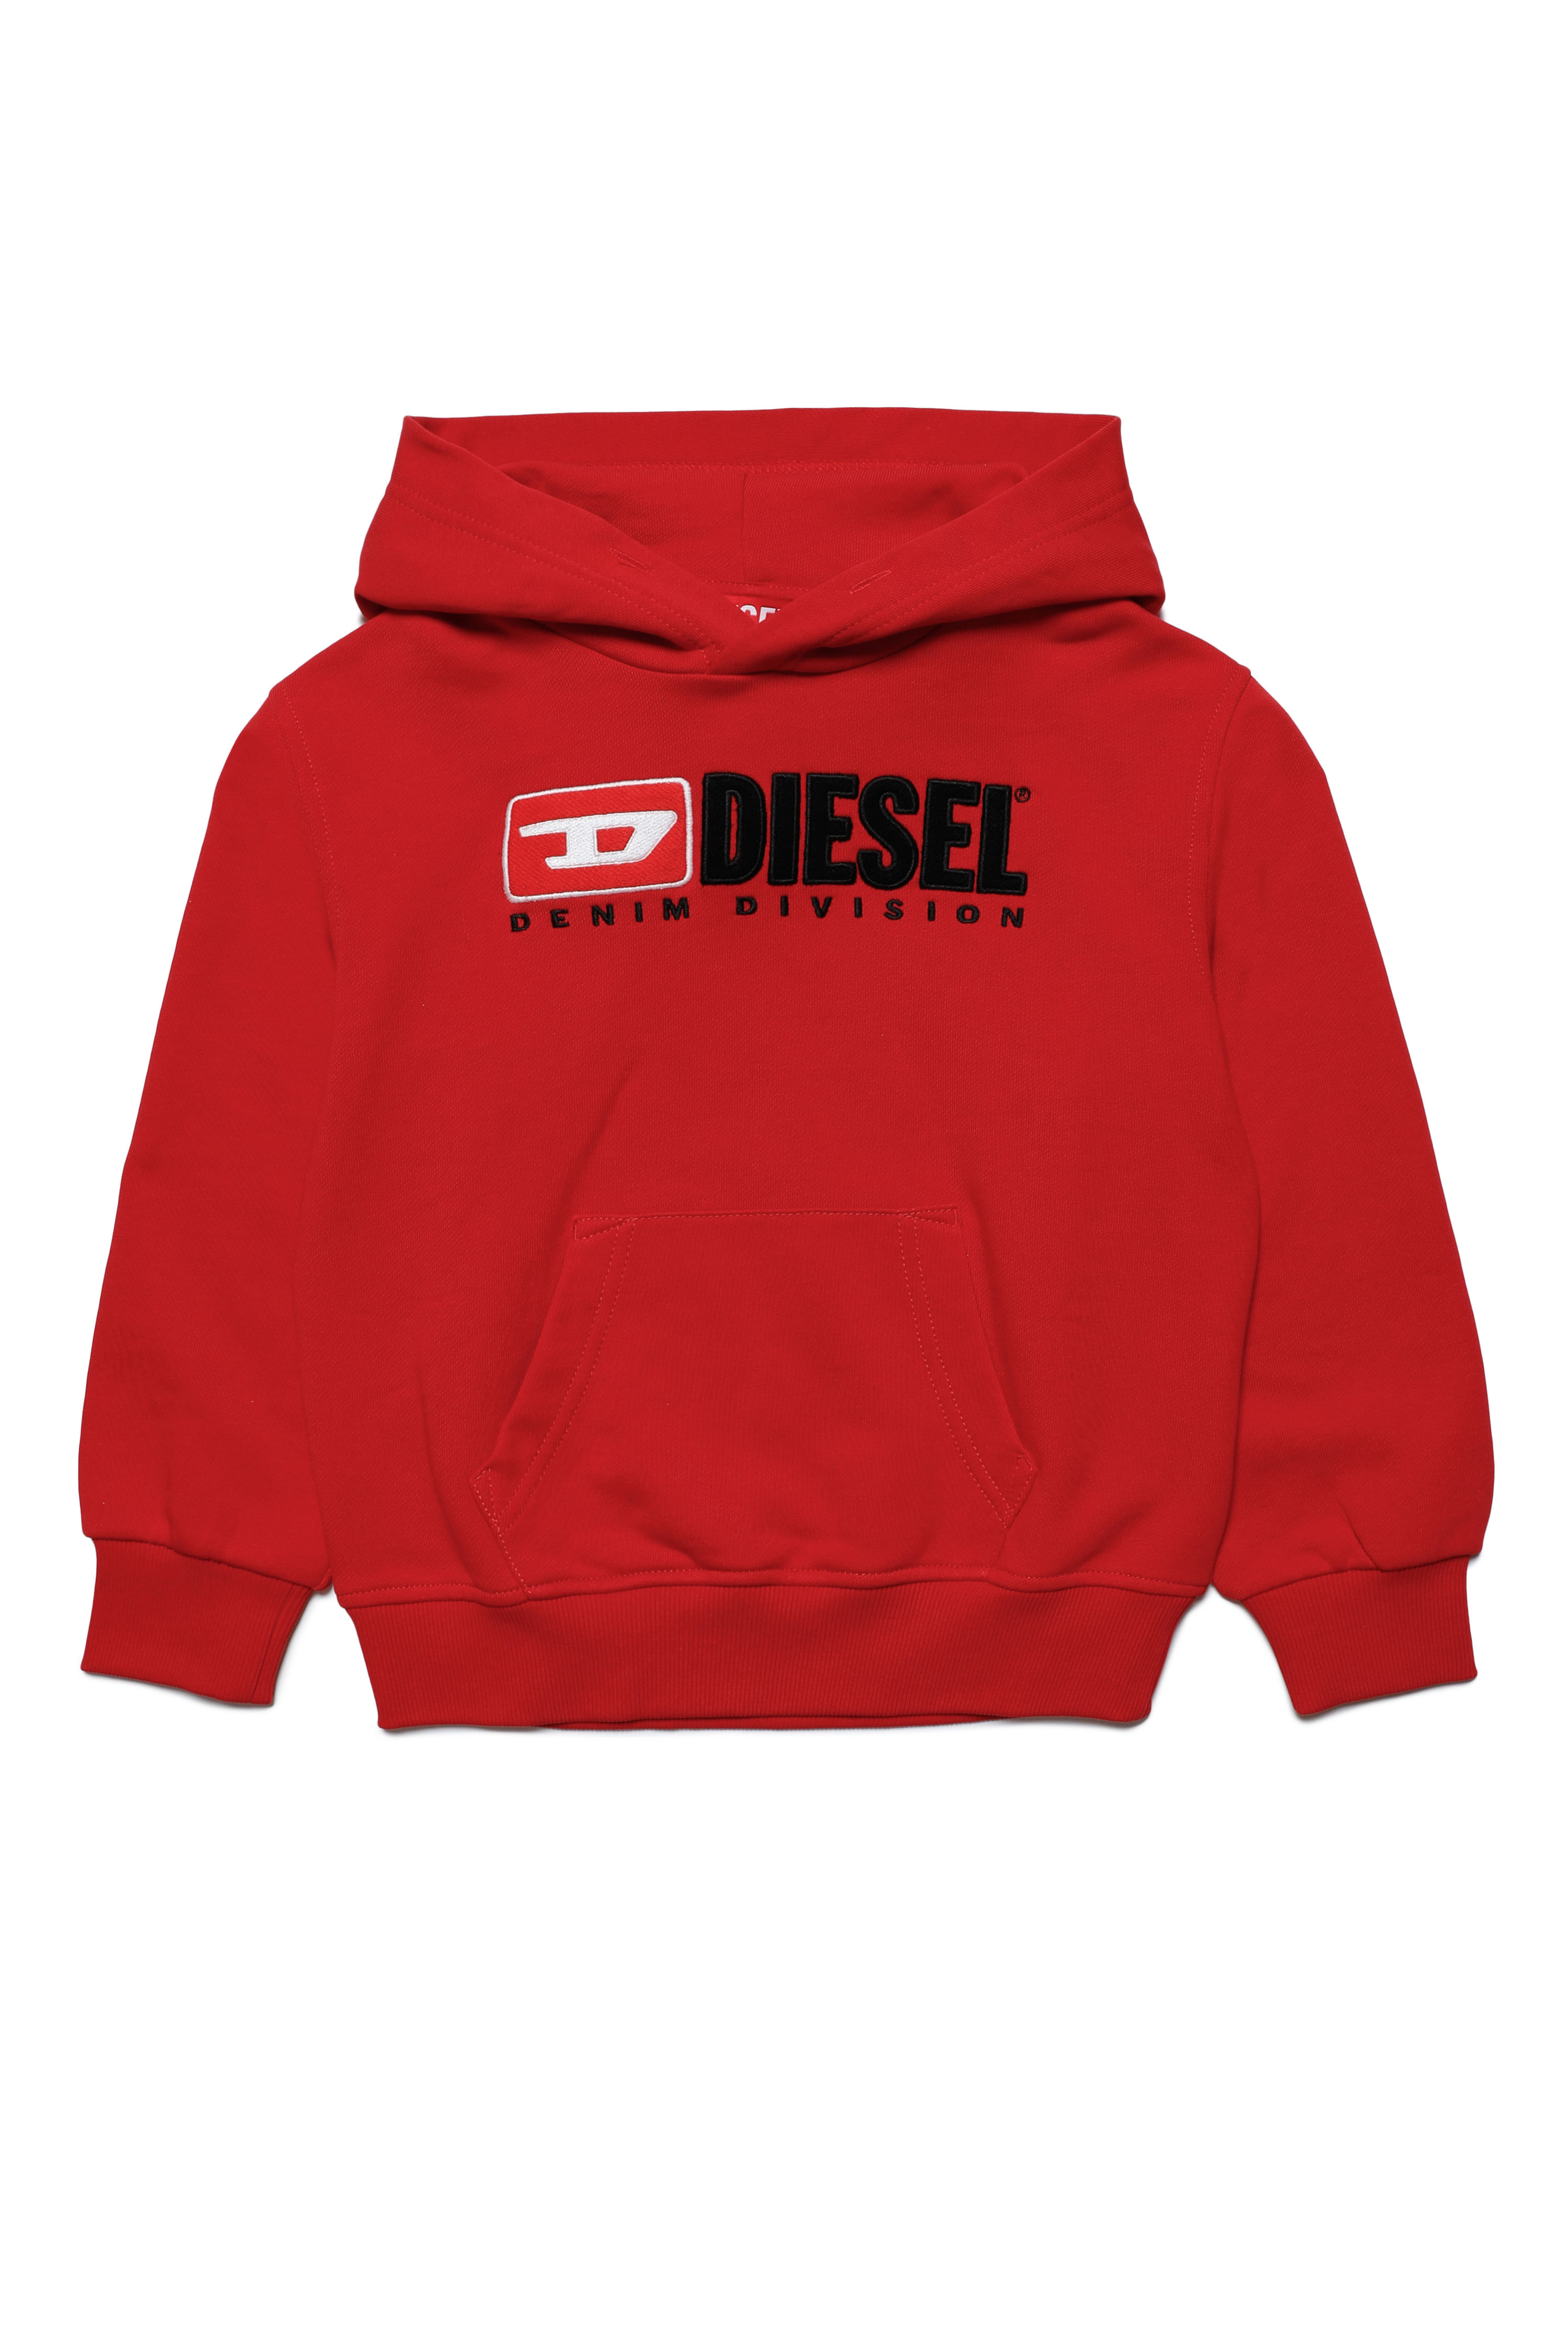 Diesel - SGINNDIVE OVER, Red - Image 1